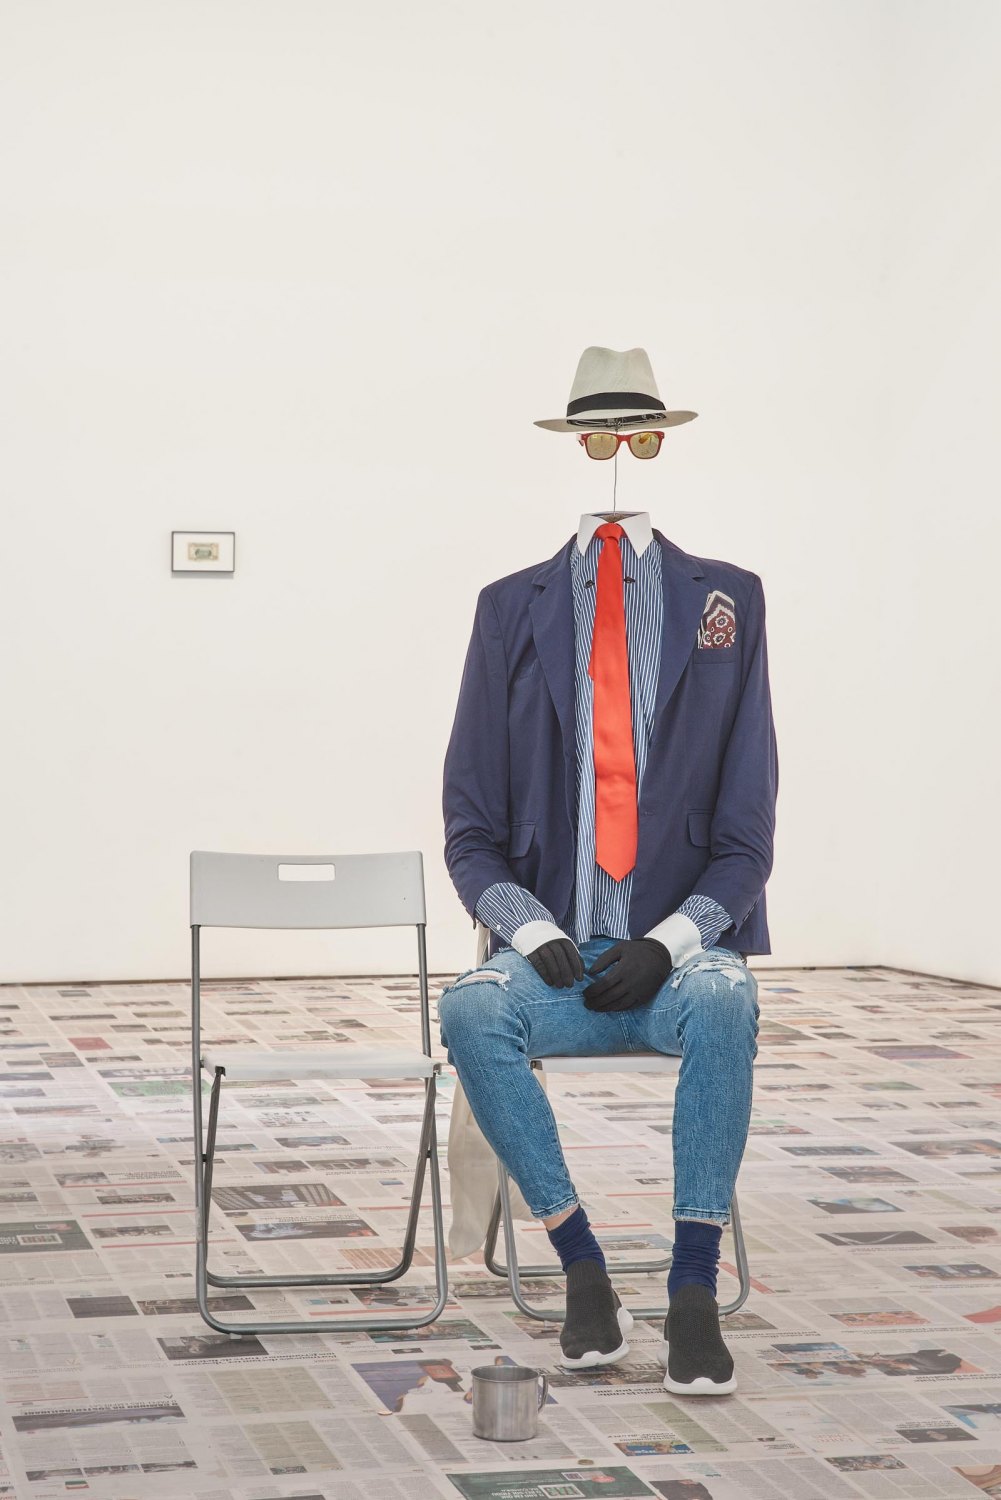 Claire Fontaine Headless Man, 2016  Mannequin, hat, sunglasses, shirt, suit jacket, tie, gloves, jeans, socks, shoes, padding, wire  